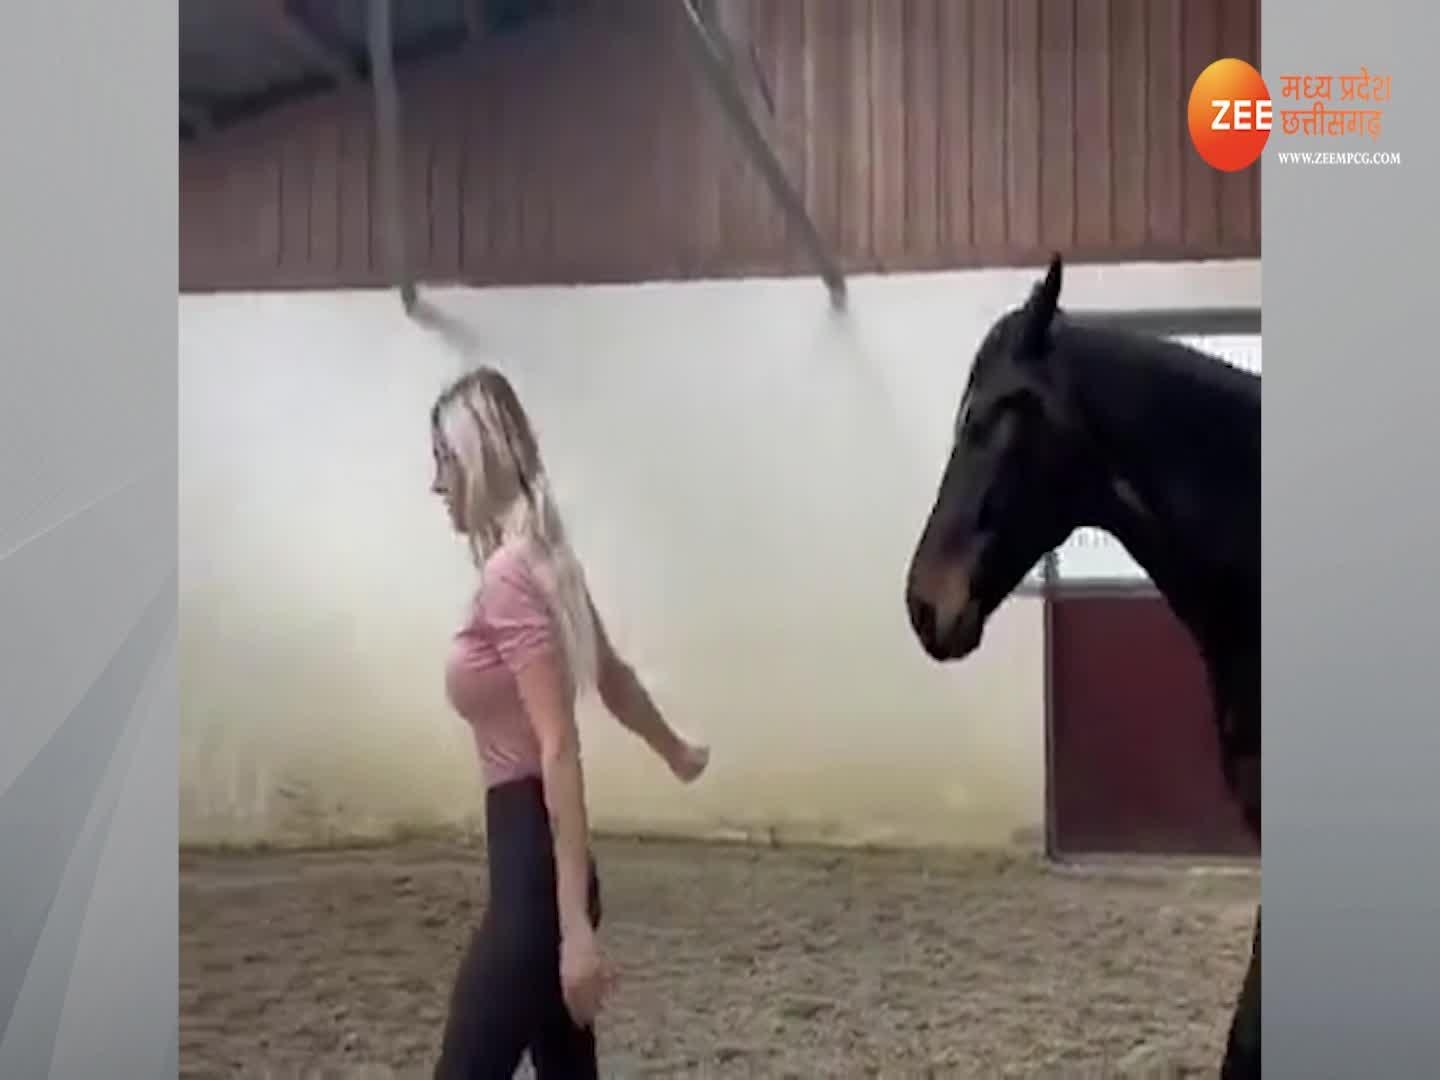 Girl and horse viral video Bridle fooled horse ladki or ghode ka video |  Girl-horse Video: à¤²à¤¡à¤¼à¤•à¥€ à¤•à¥‹ à¤¦à¥‡à¤–à¤•à¤° à¤˜à¥‹à¤¡à¤¼à¤¾ à¤•à¤°à¤¨à¥‡ à¤²à¤—à¤¾ à¤¯à¥‡ à¤šà¥€à¤œ, à¤¦à¥‡à¤–à¤¿à¤ VIDEO | Zee  News Hindi